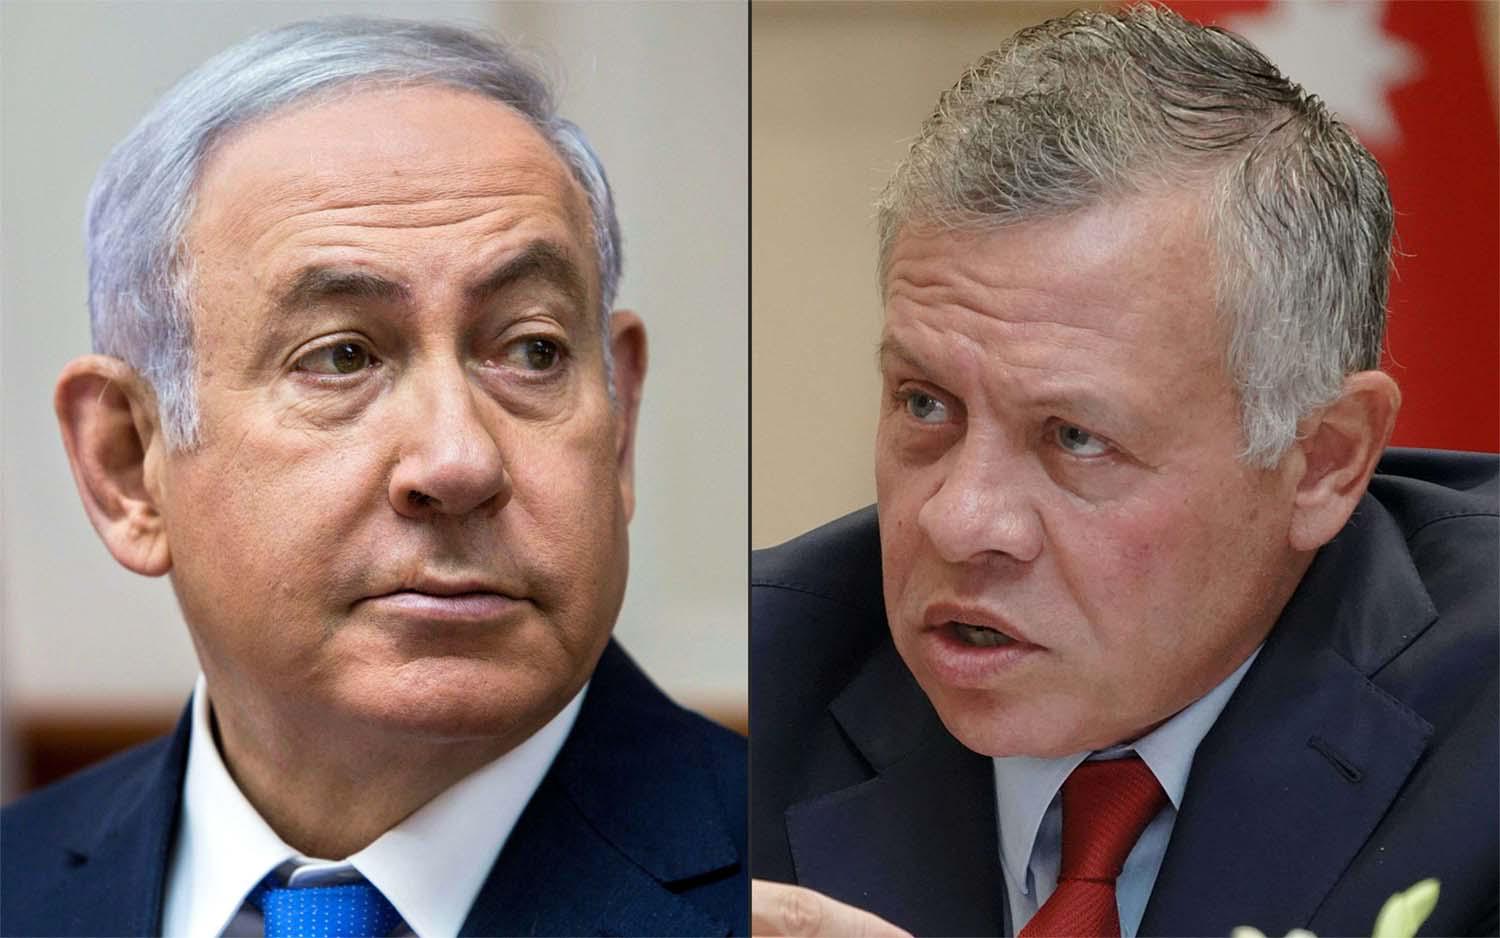 Netanyahu and King Abdullah II